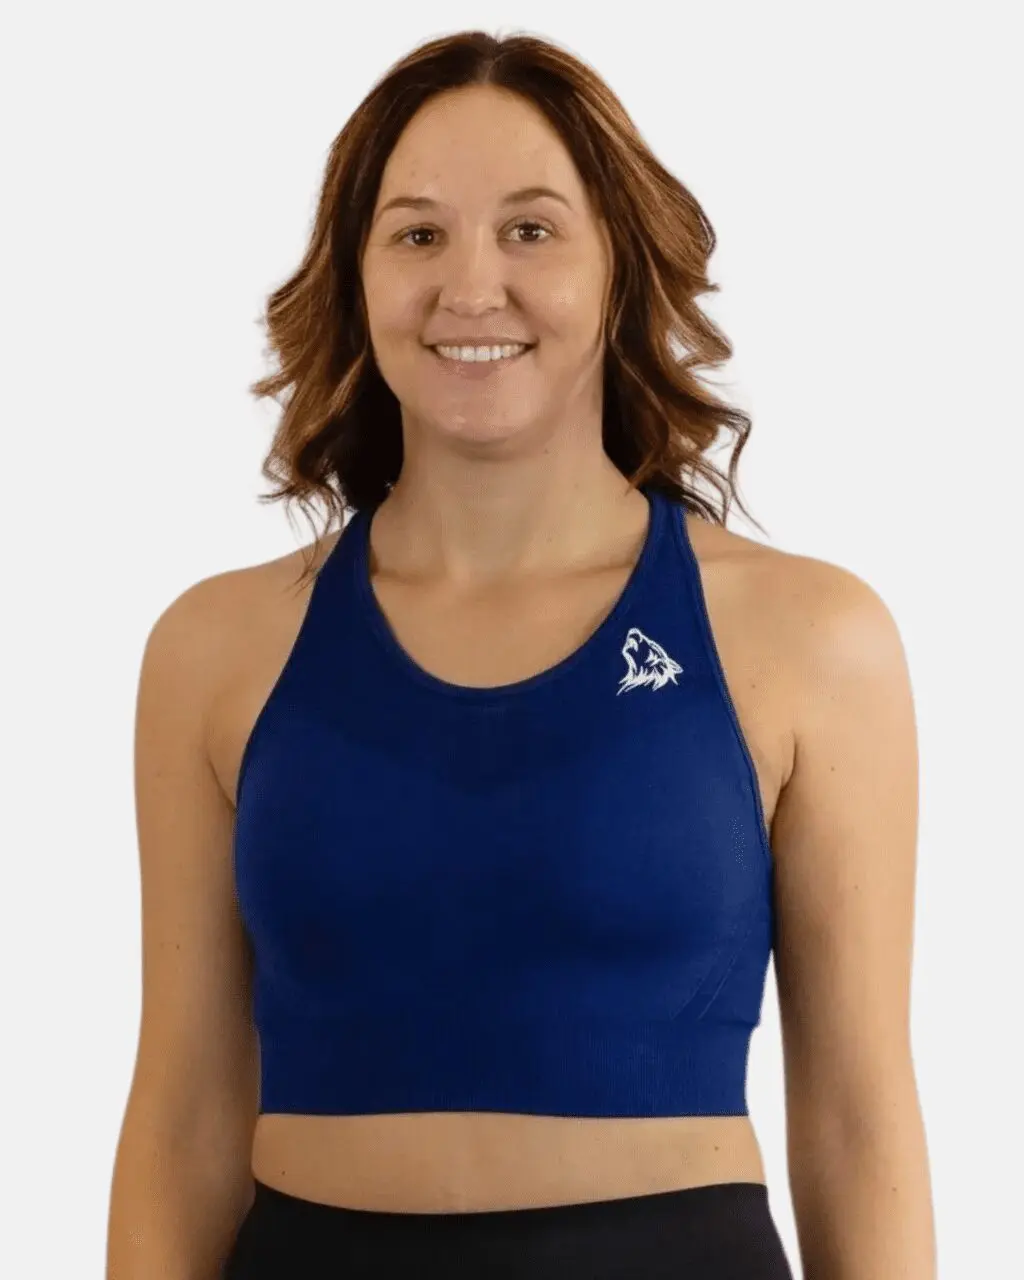 A woman wearing a blue sports bra smiling.